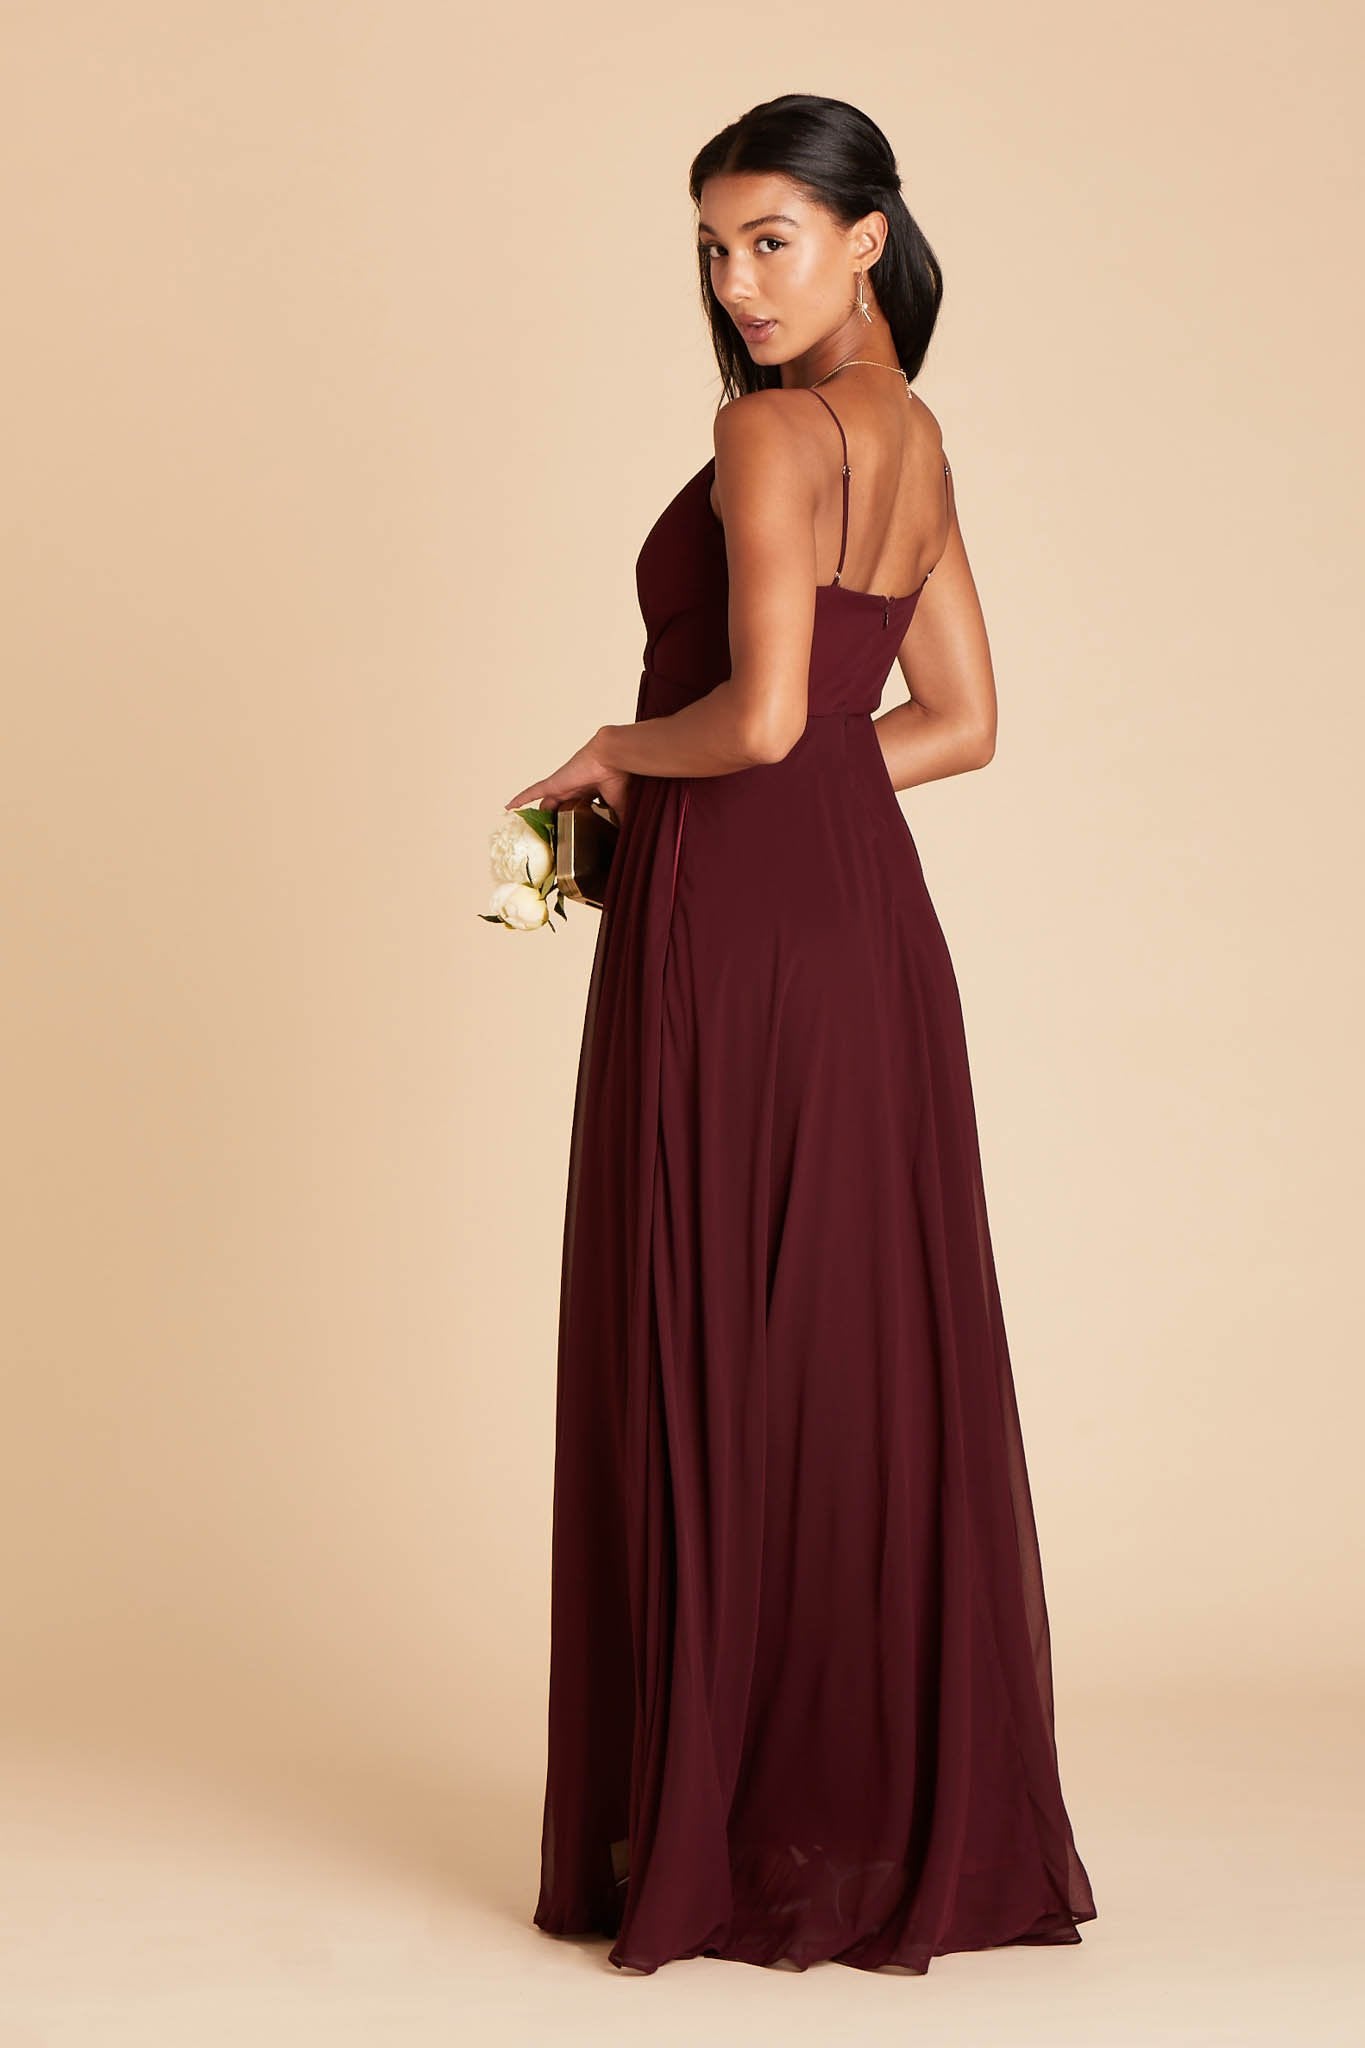 Kaia bridesmaids dress in cabernet burgundy chiffon by Birdy Grey, side view